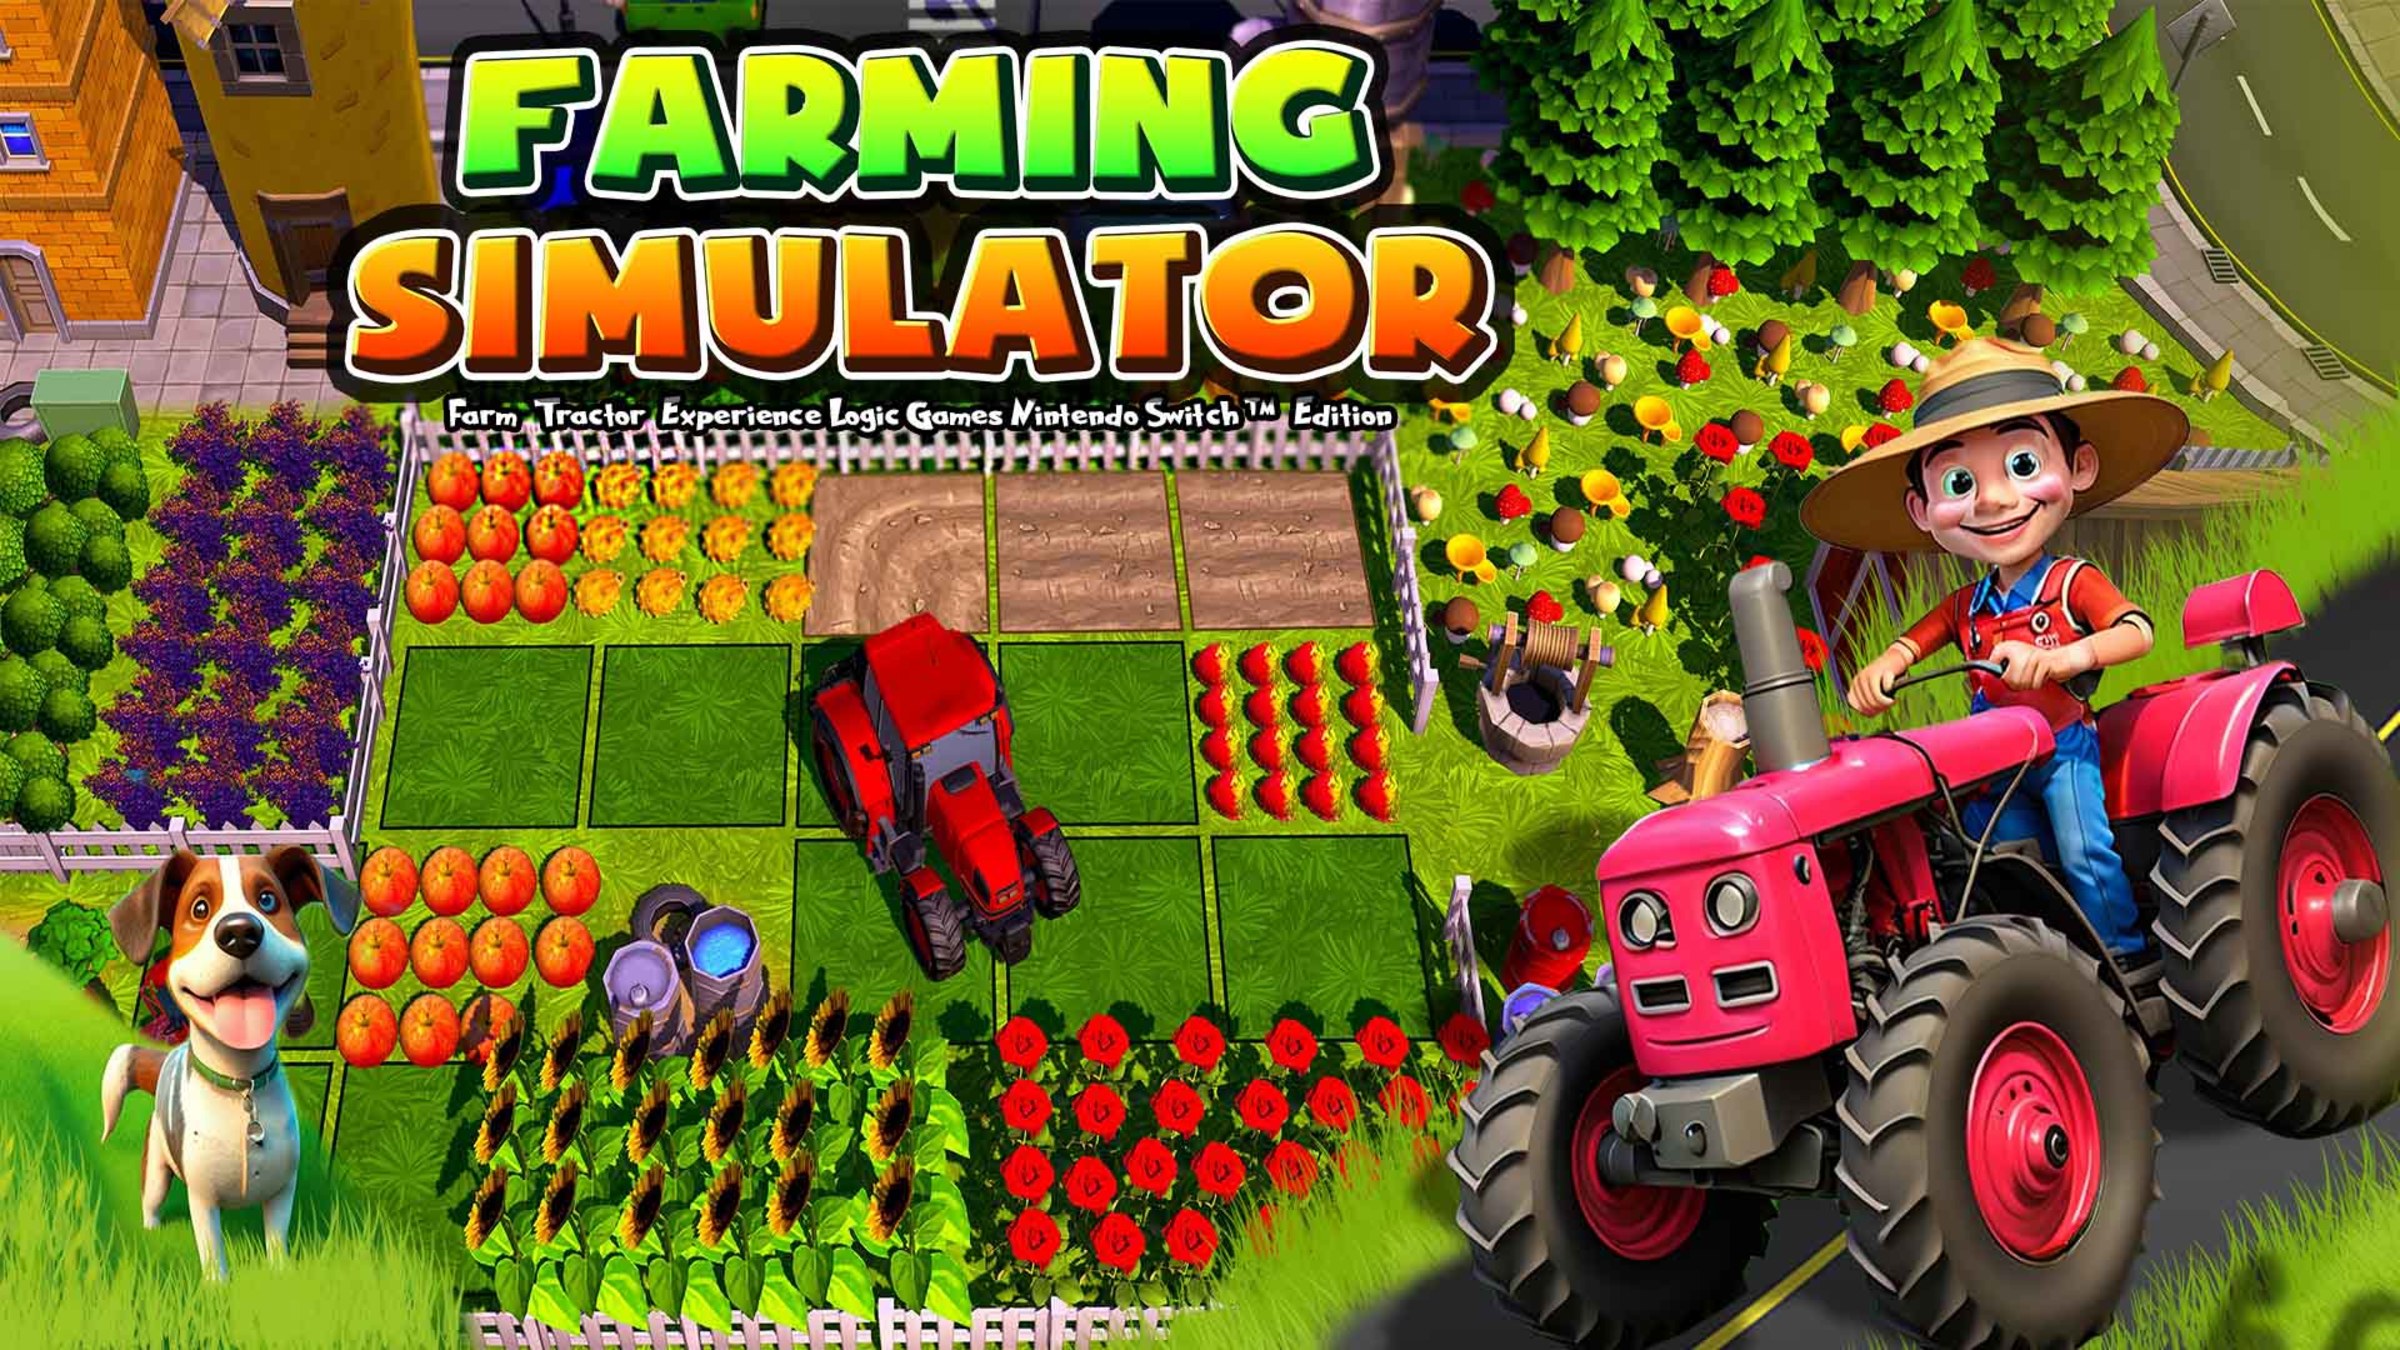 Farming Simulator 23 - Nintendo Switch : : Video Games